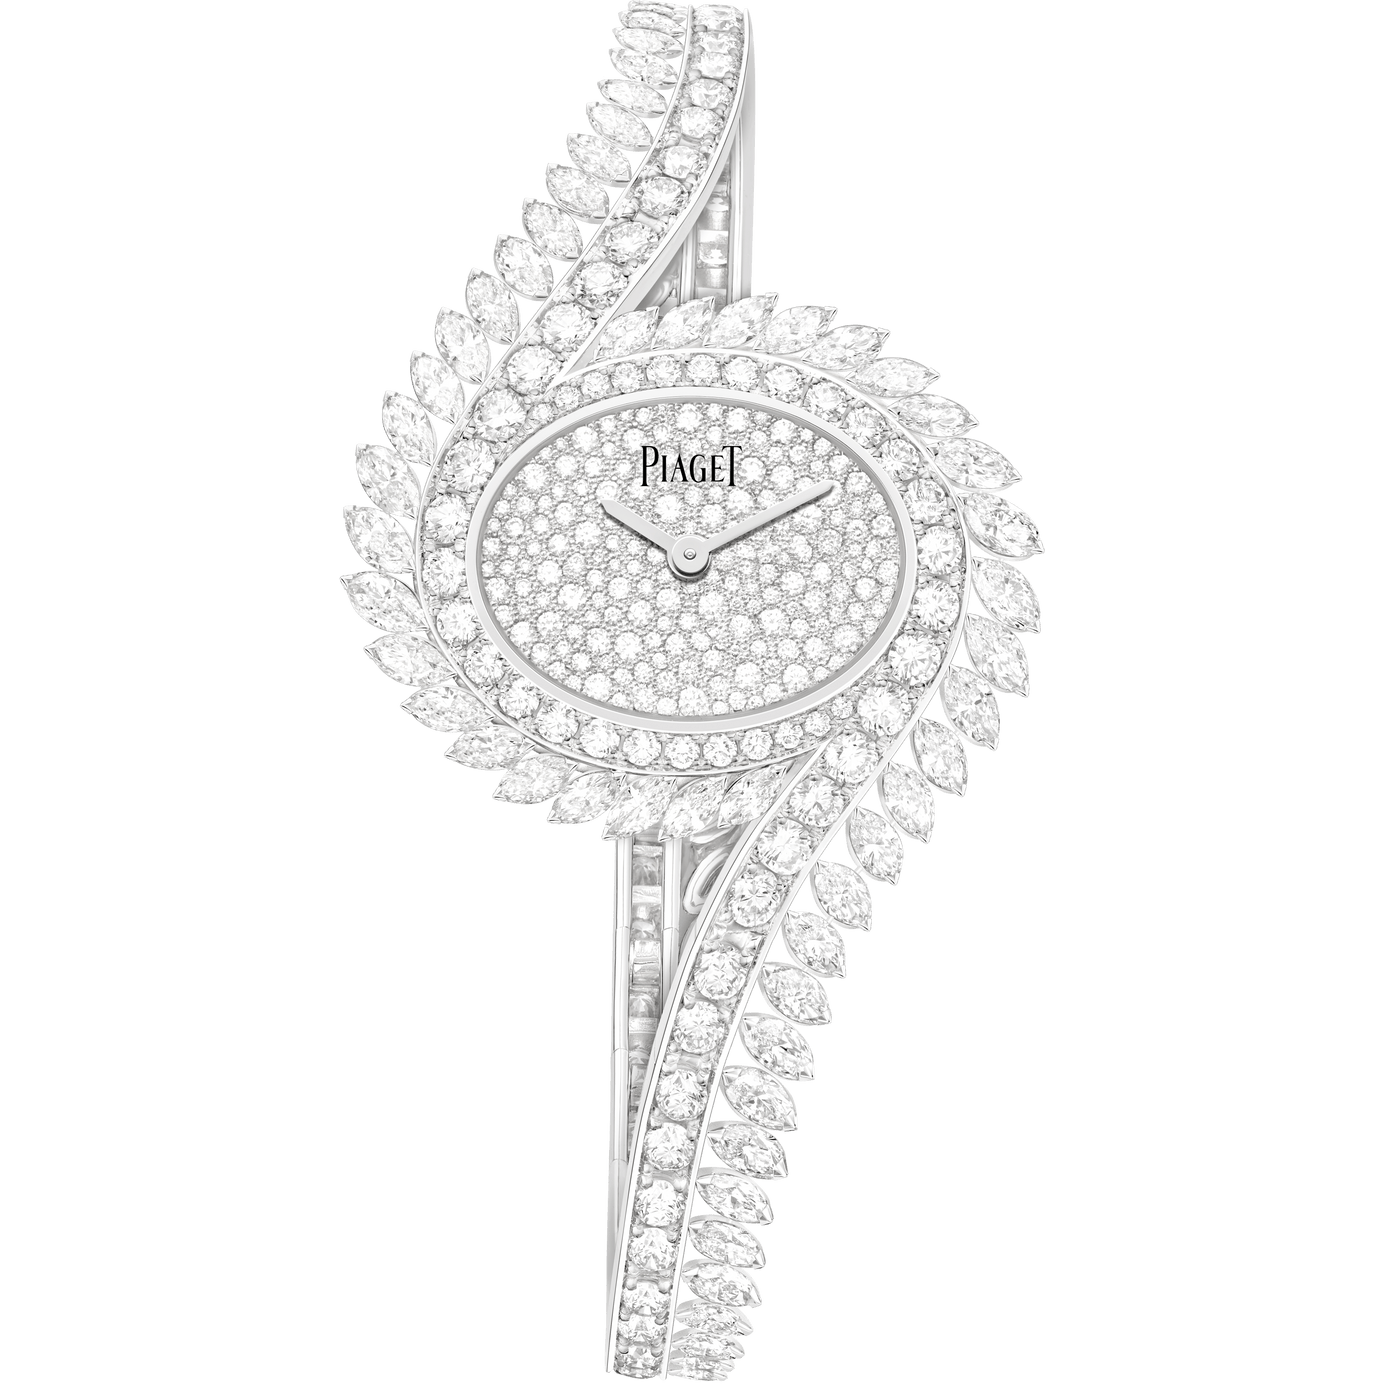 Piaget Limelight Gala High-Jewellery